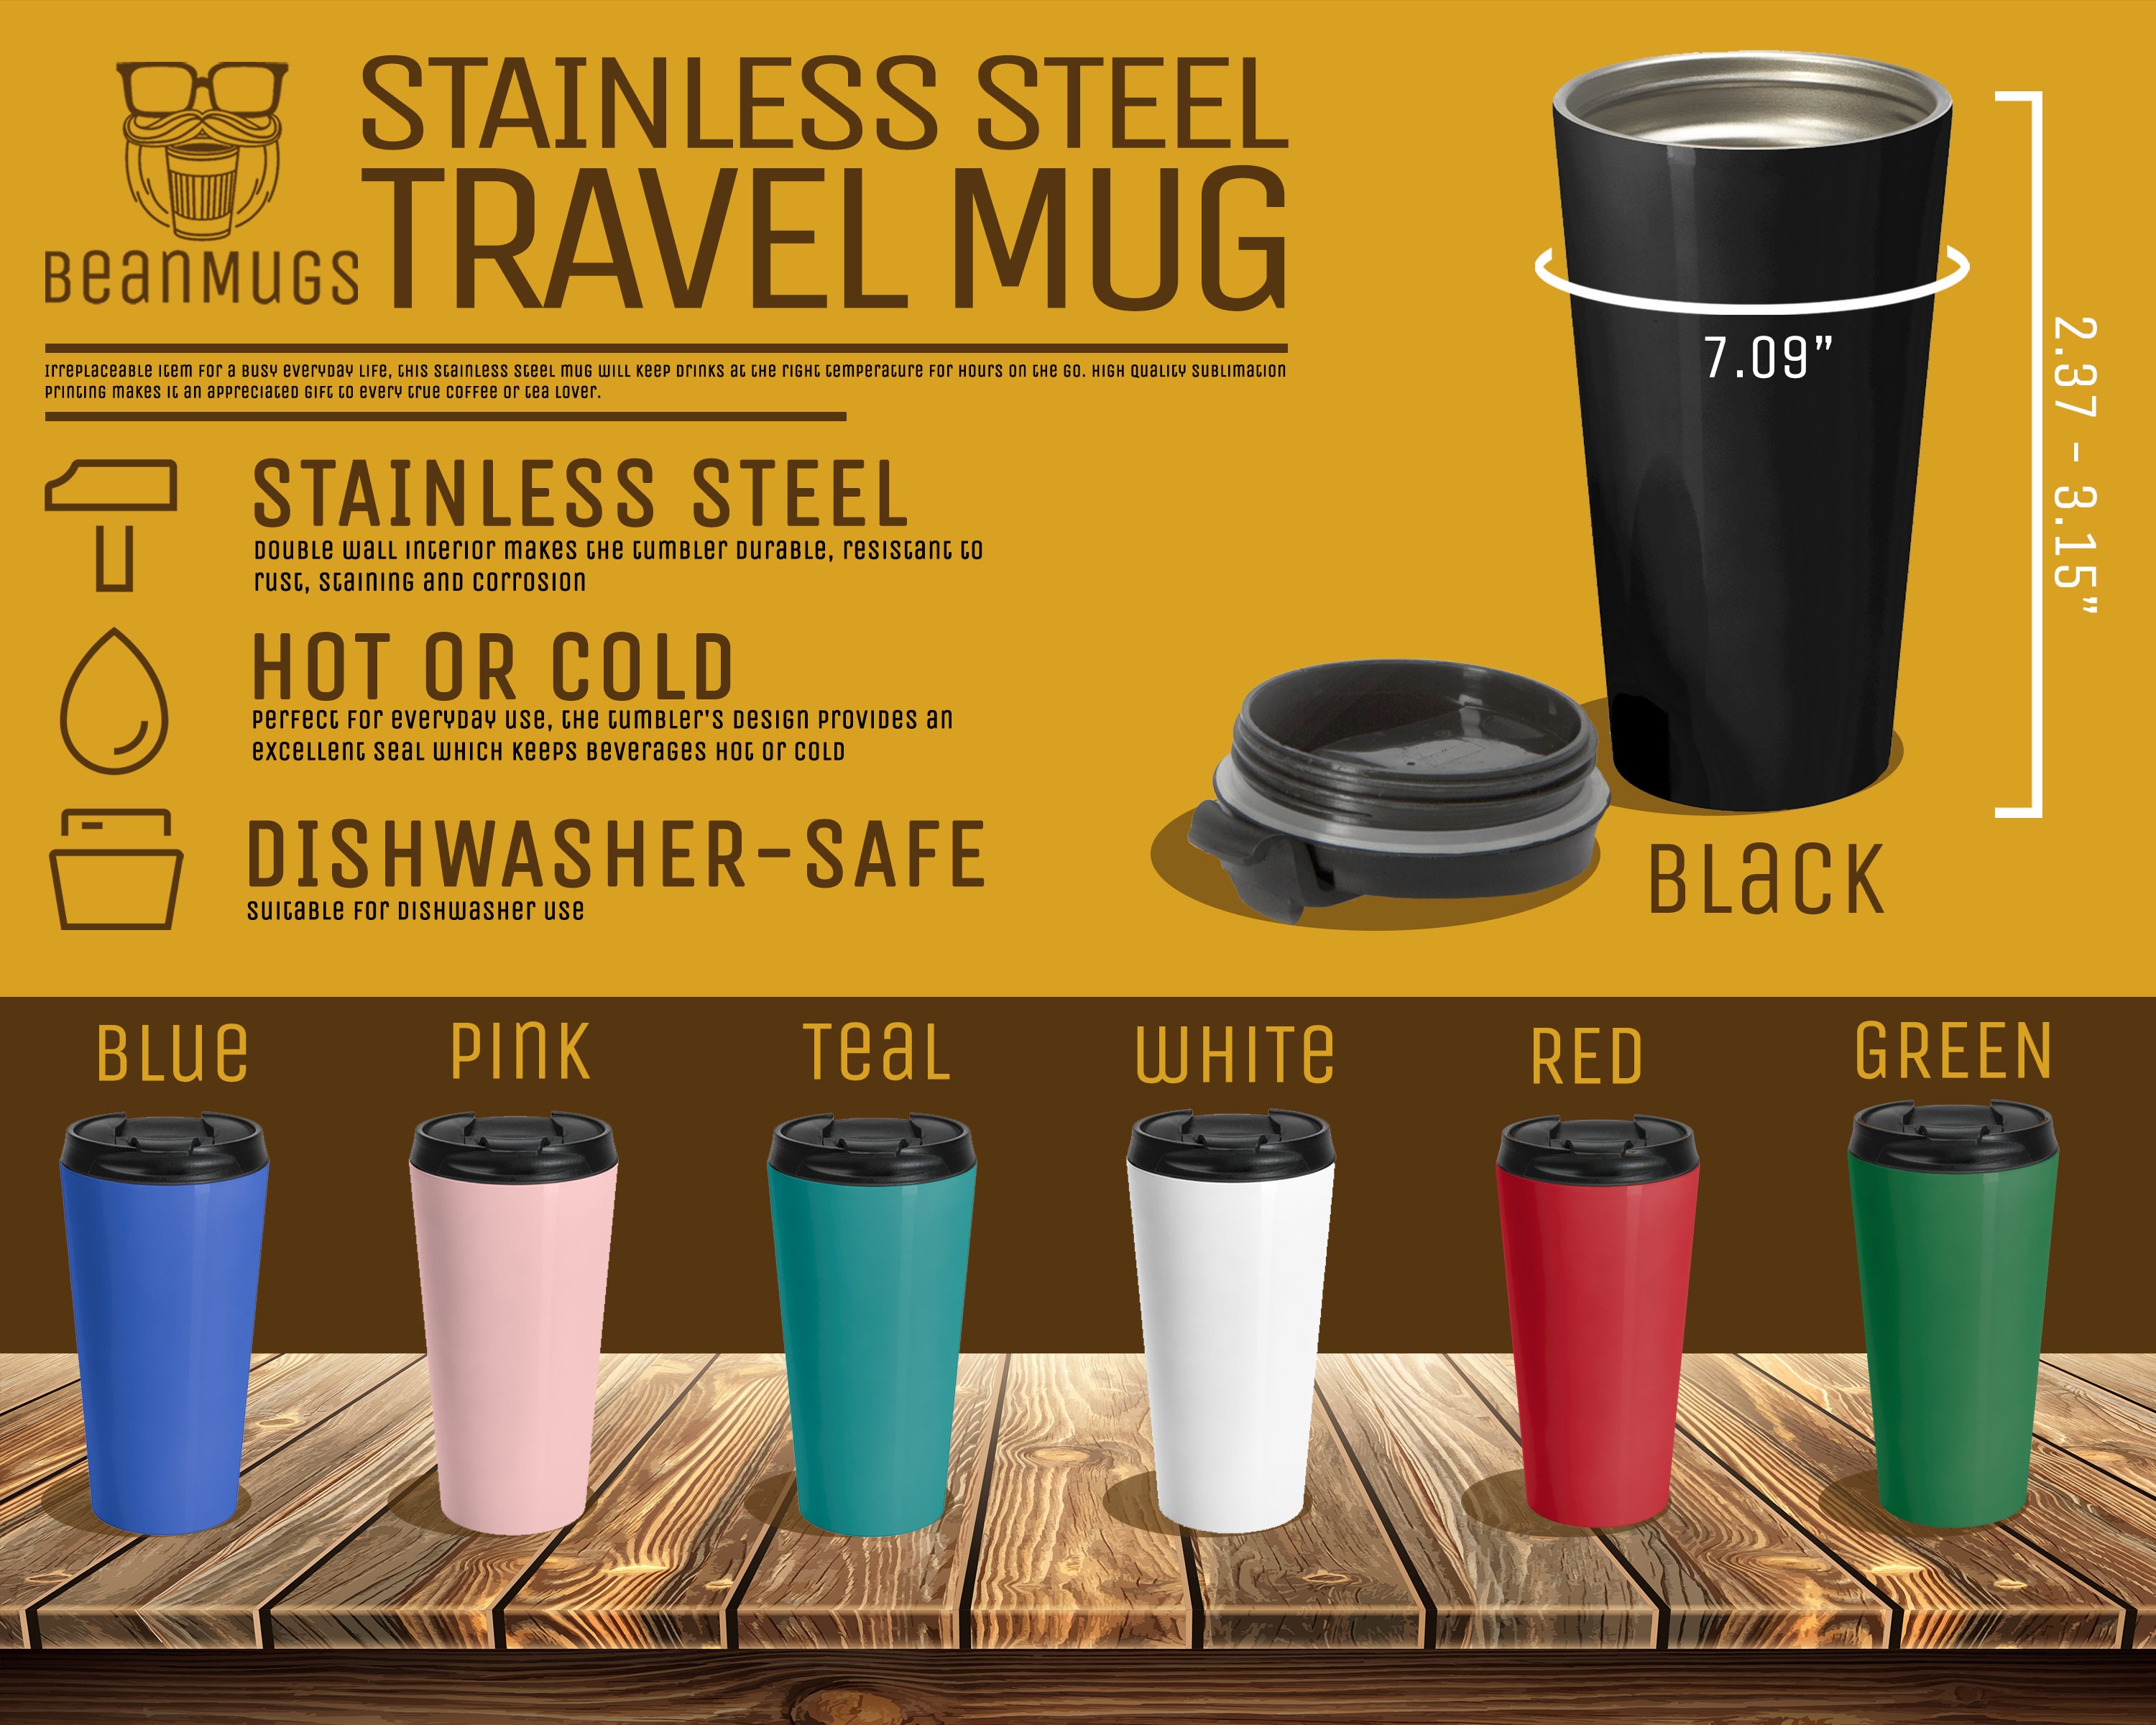 Murse Mug, Bearded Male Nurse Coffee Mugs, Funny Gifts for Men Nurses,  Gifts, Tumbler Travel Mug Beer Can Holder Cooler 